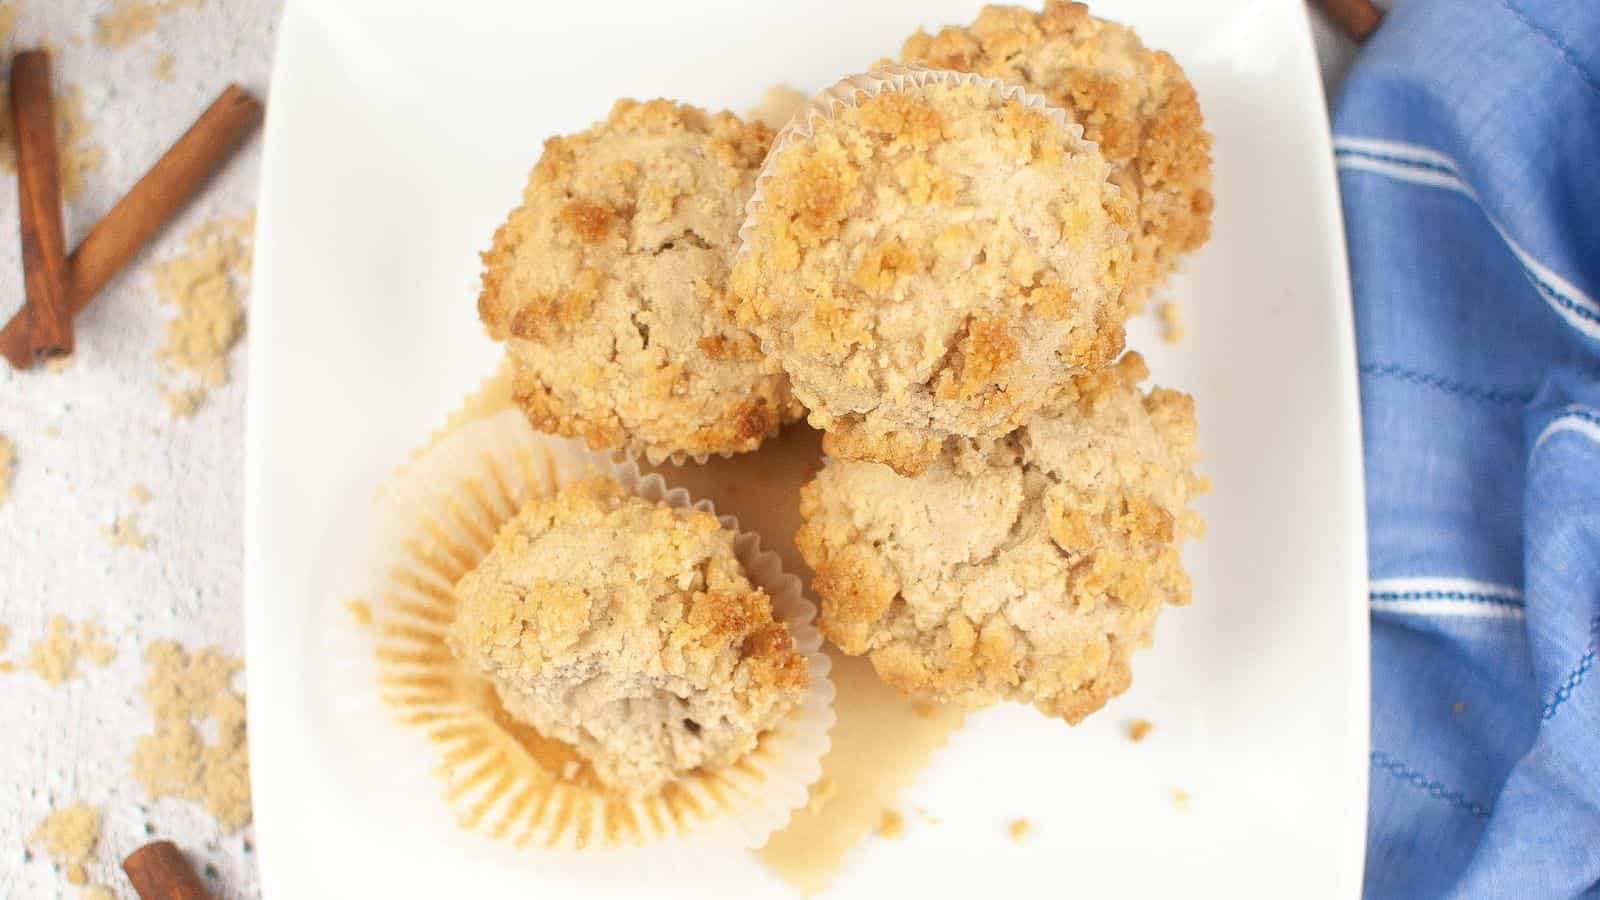 Cinnamon sourdough discard muffins on a plate.